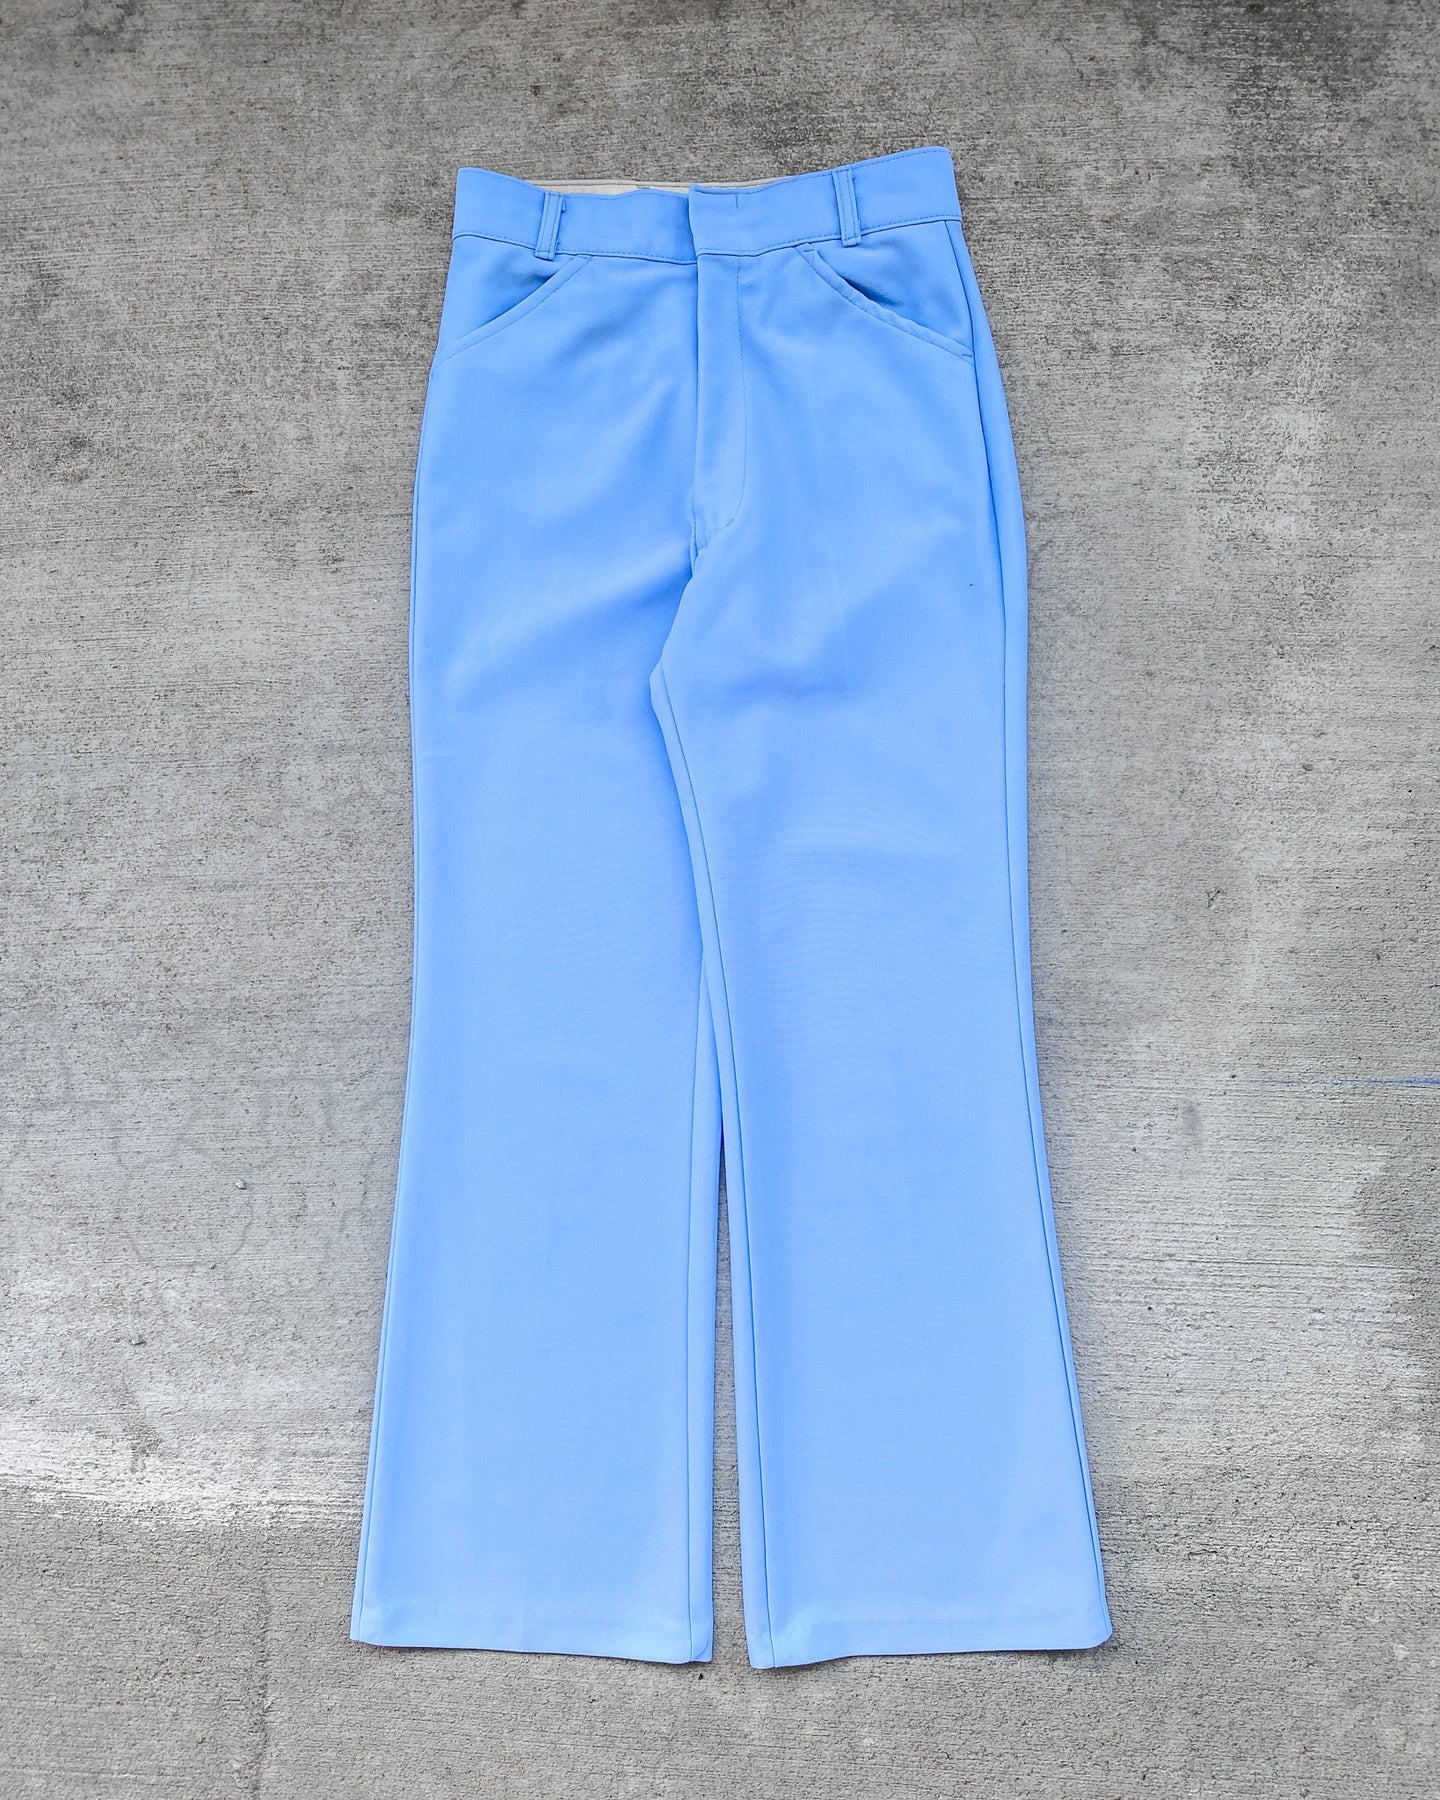 1970s Baby Blue Dress Pants - Size 28 x 30